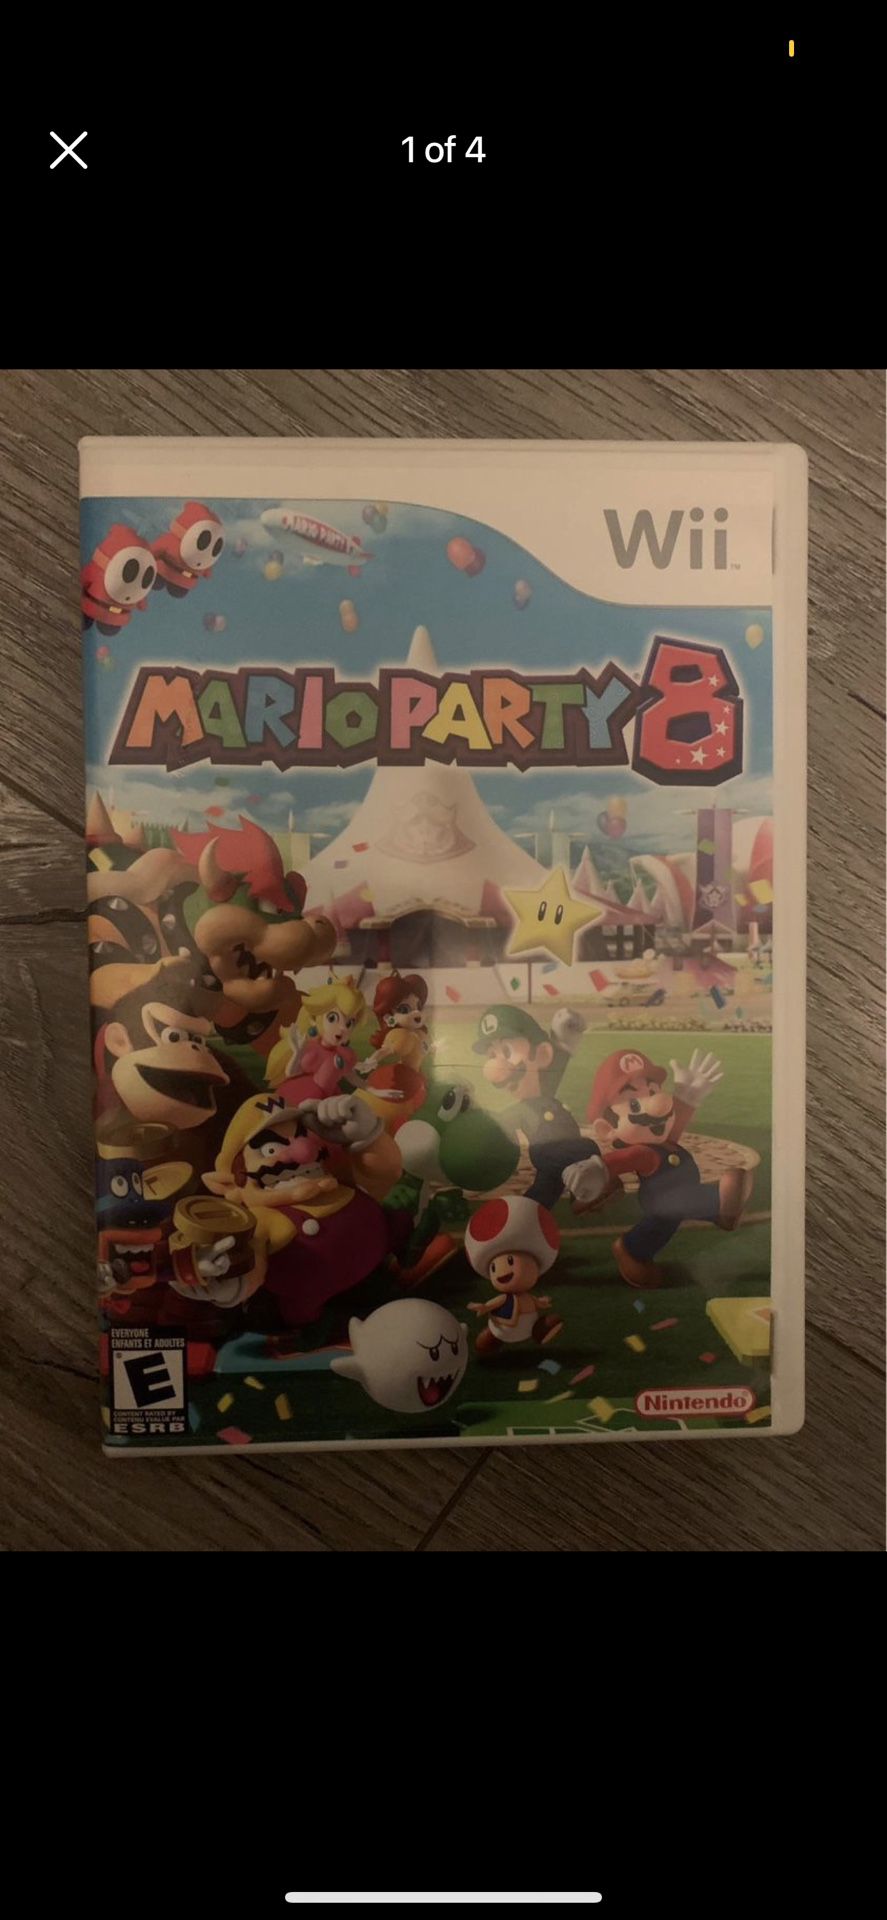 Mario Party 8  For Nintendo Wii